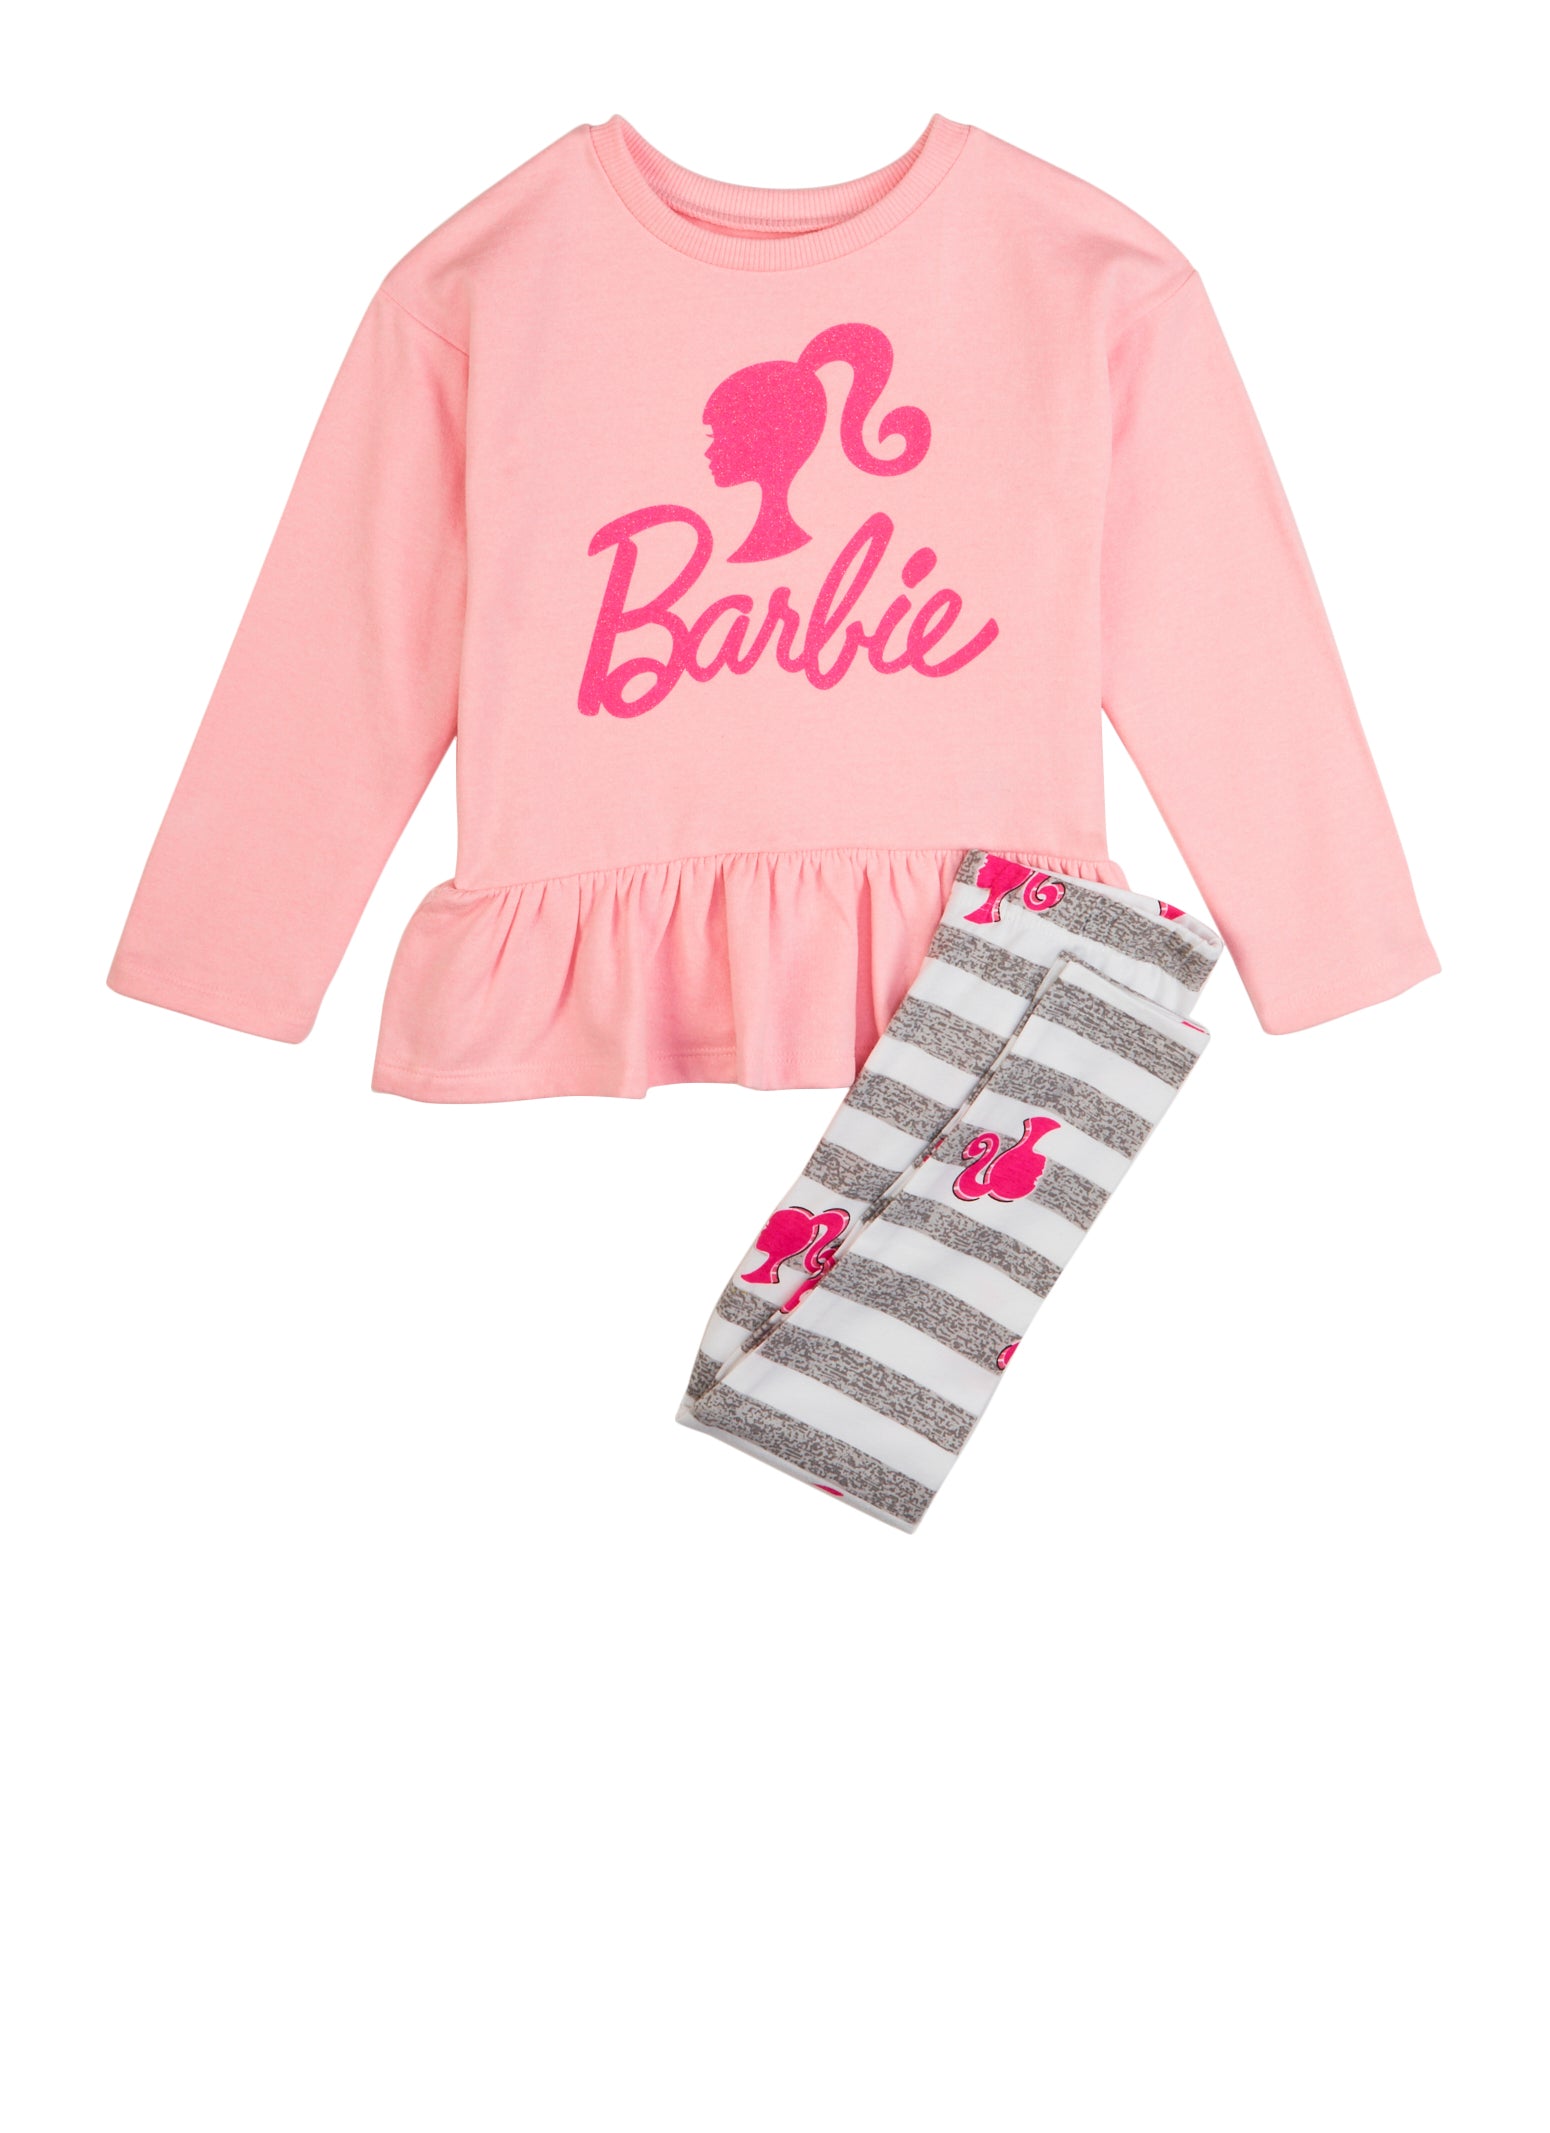 Little Girls Barbie Peplum Sweatshirt and Leggings - Pink